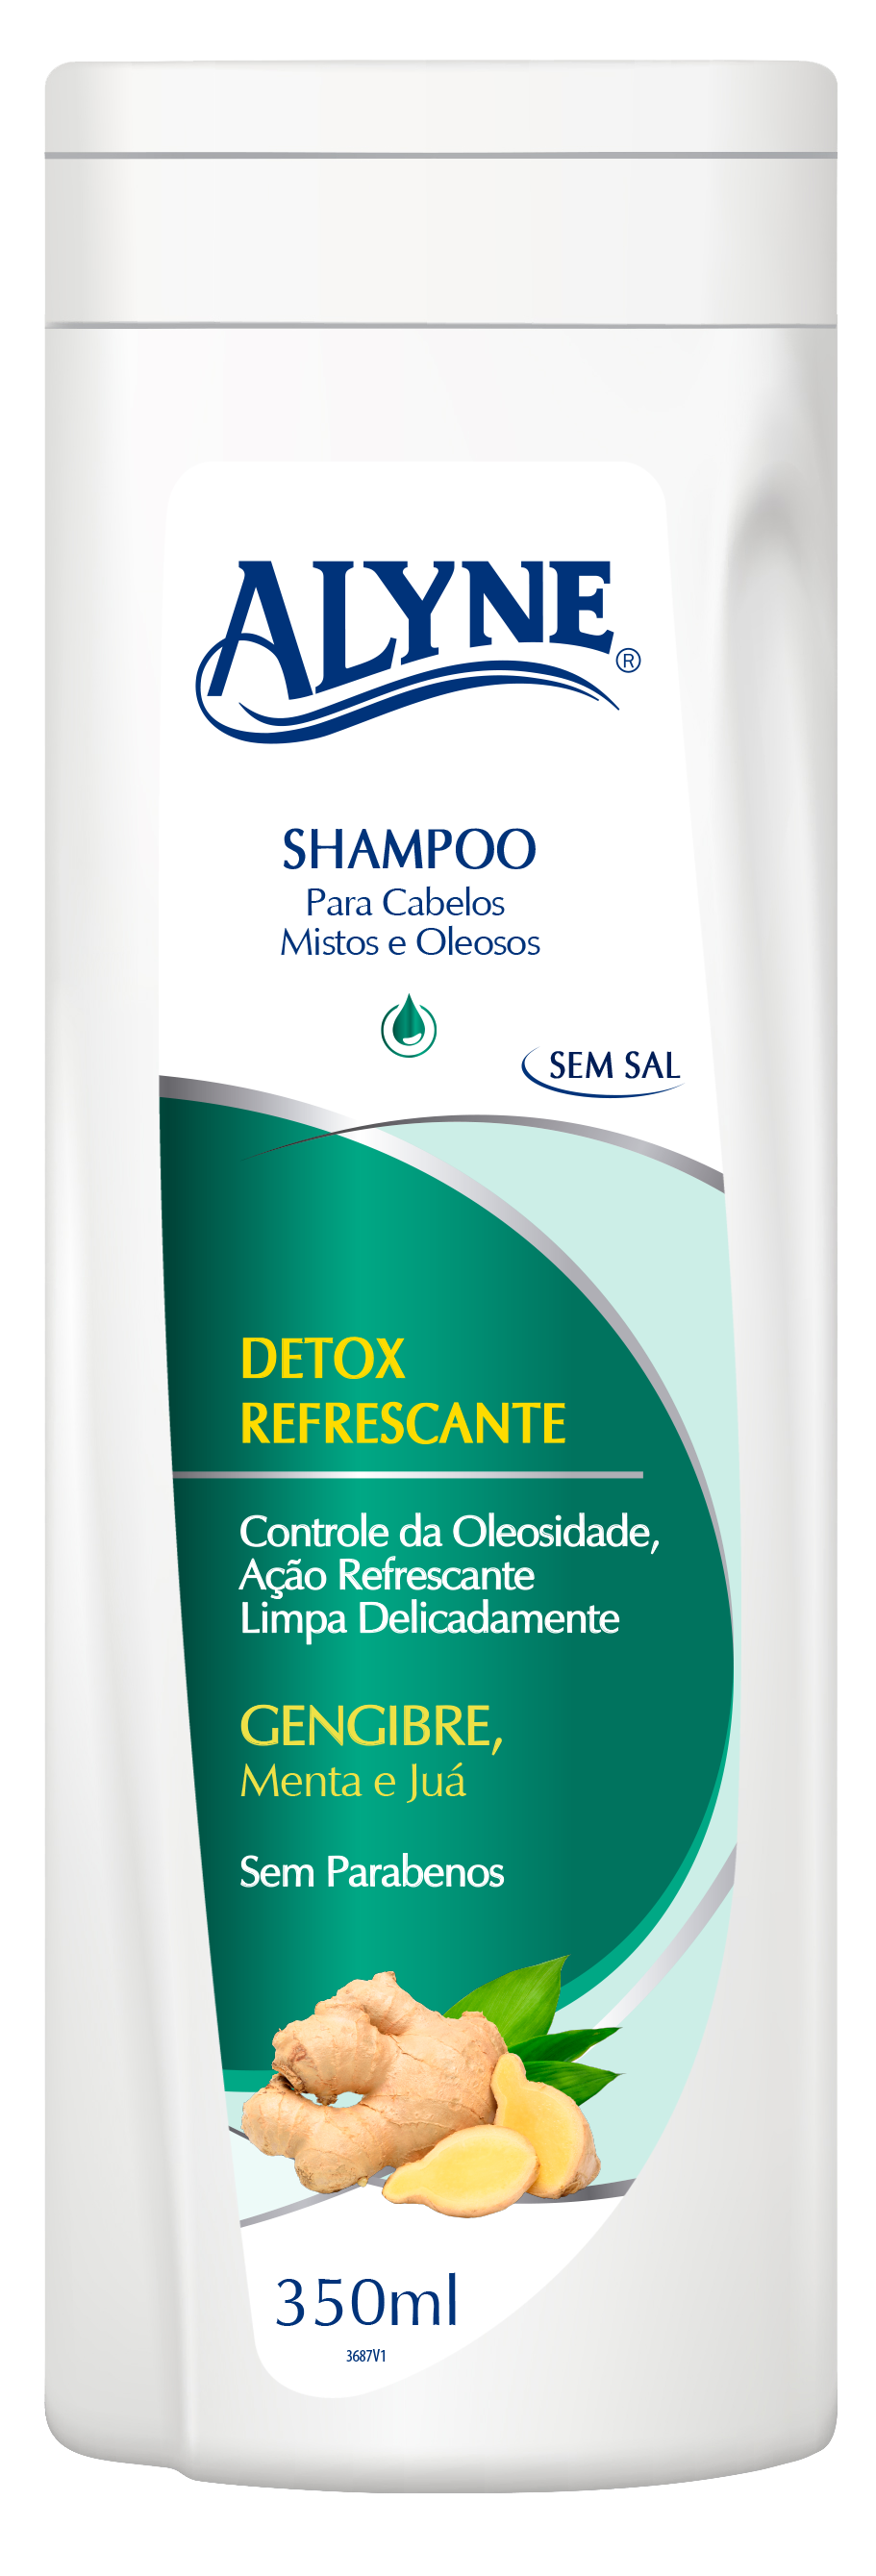 Shampoo Alyne Detox Refrescante 350ml